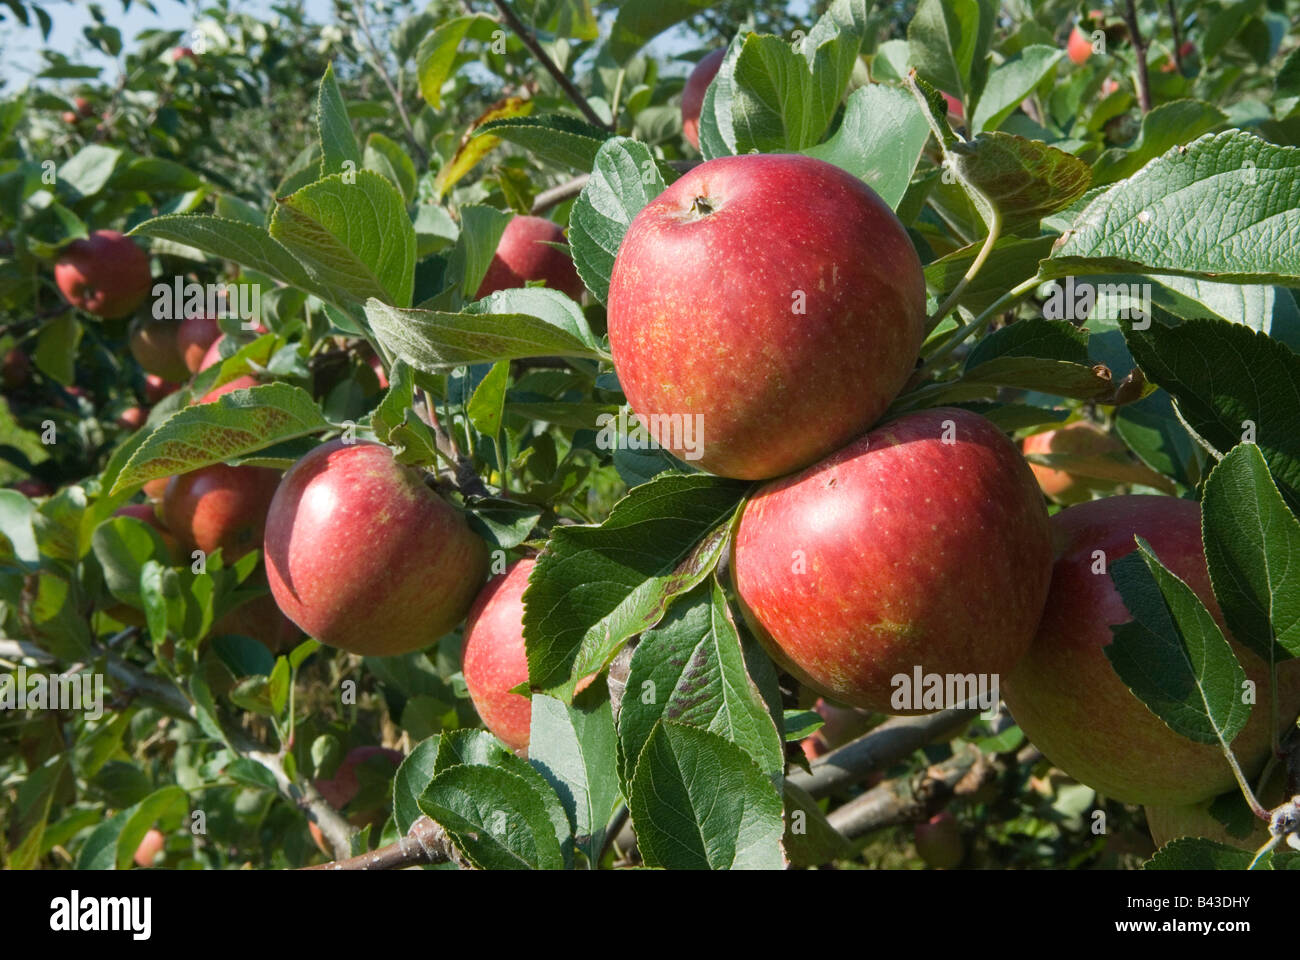 English Apples. Kidds Orange apples Lathcoats Apple Farm Galleywood Essex UK HOMER SYKES Stock Photo